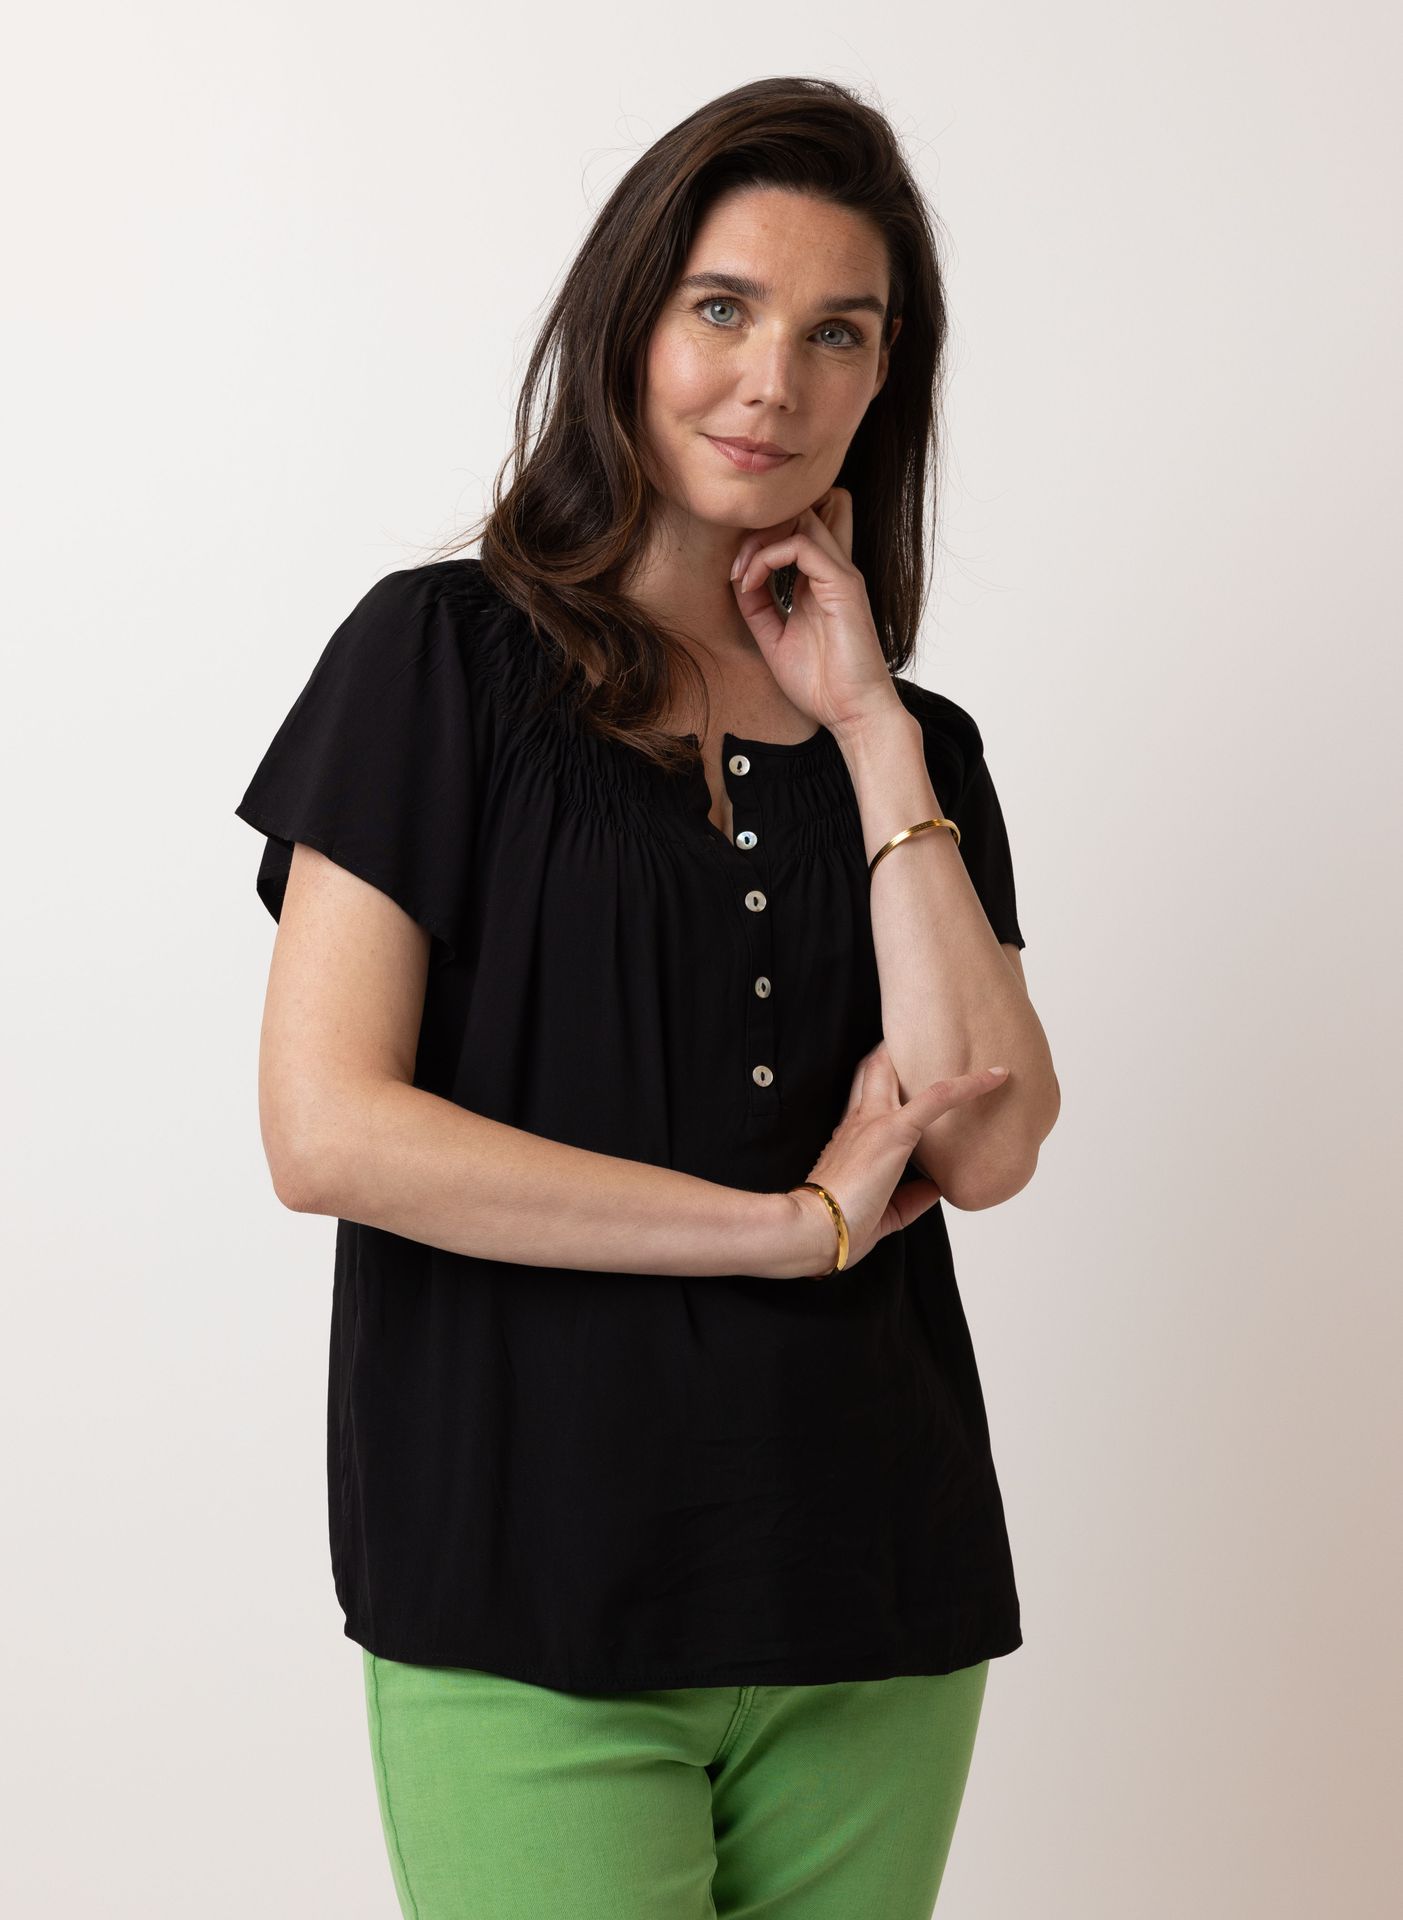 Norah Zwarte blouse black 214509-001